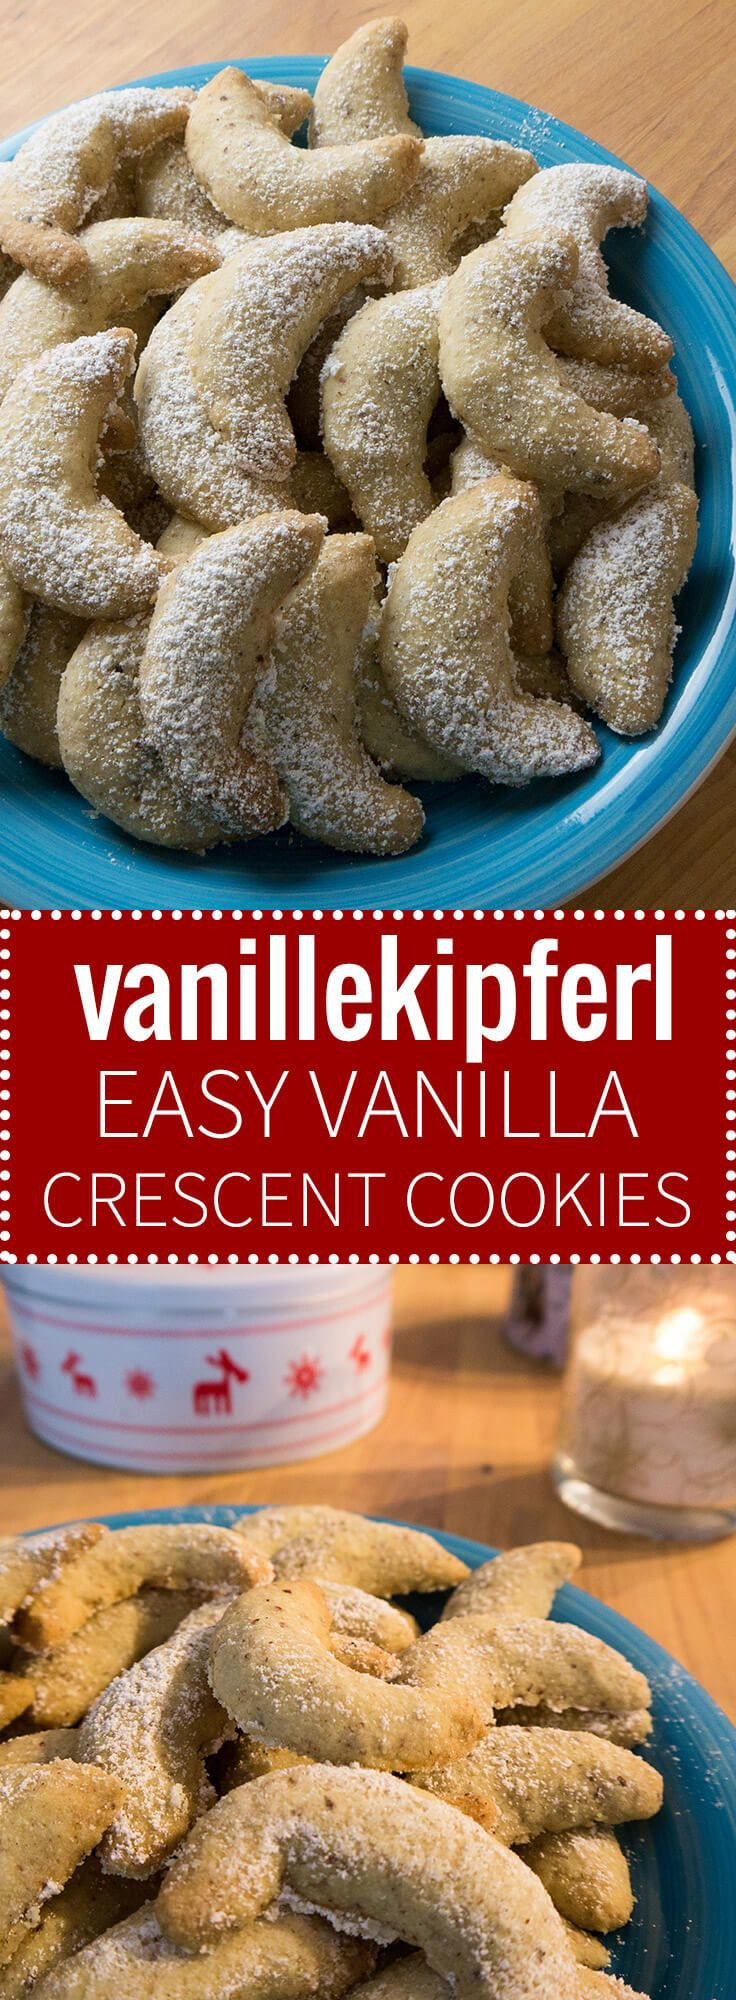 Traditional German Christmas Desserts
 Vanillekipferl German Vanilla Crescent Cookies are